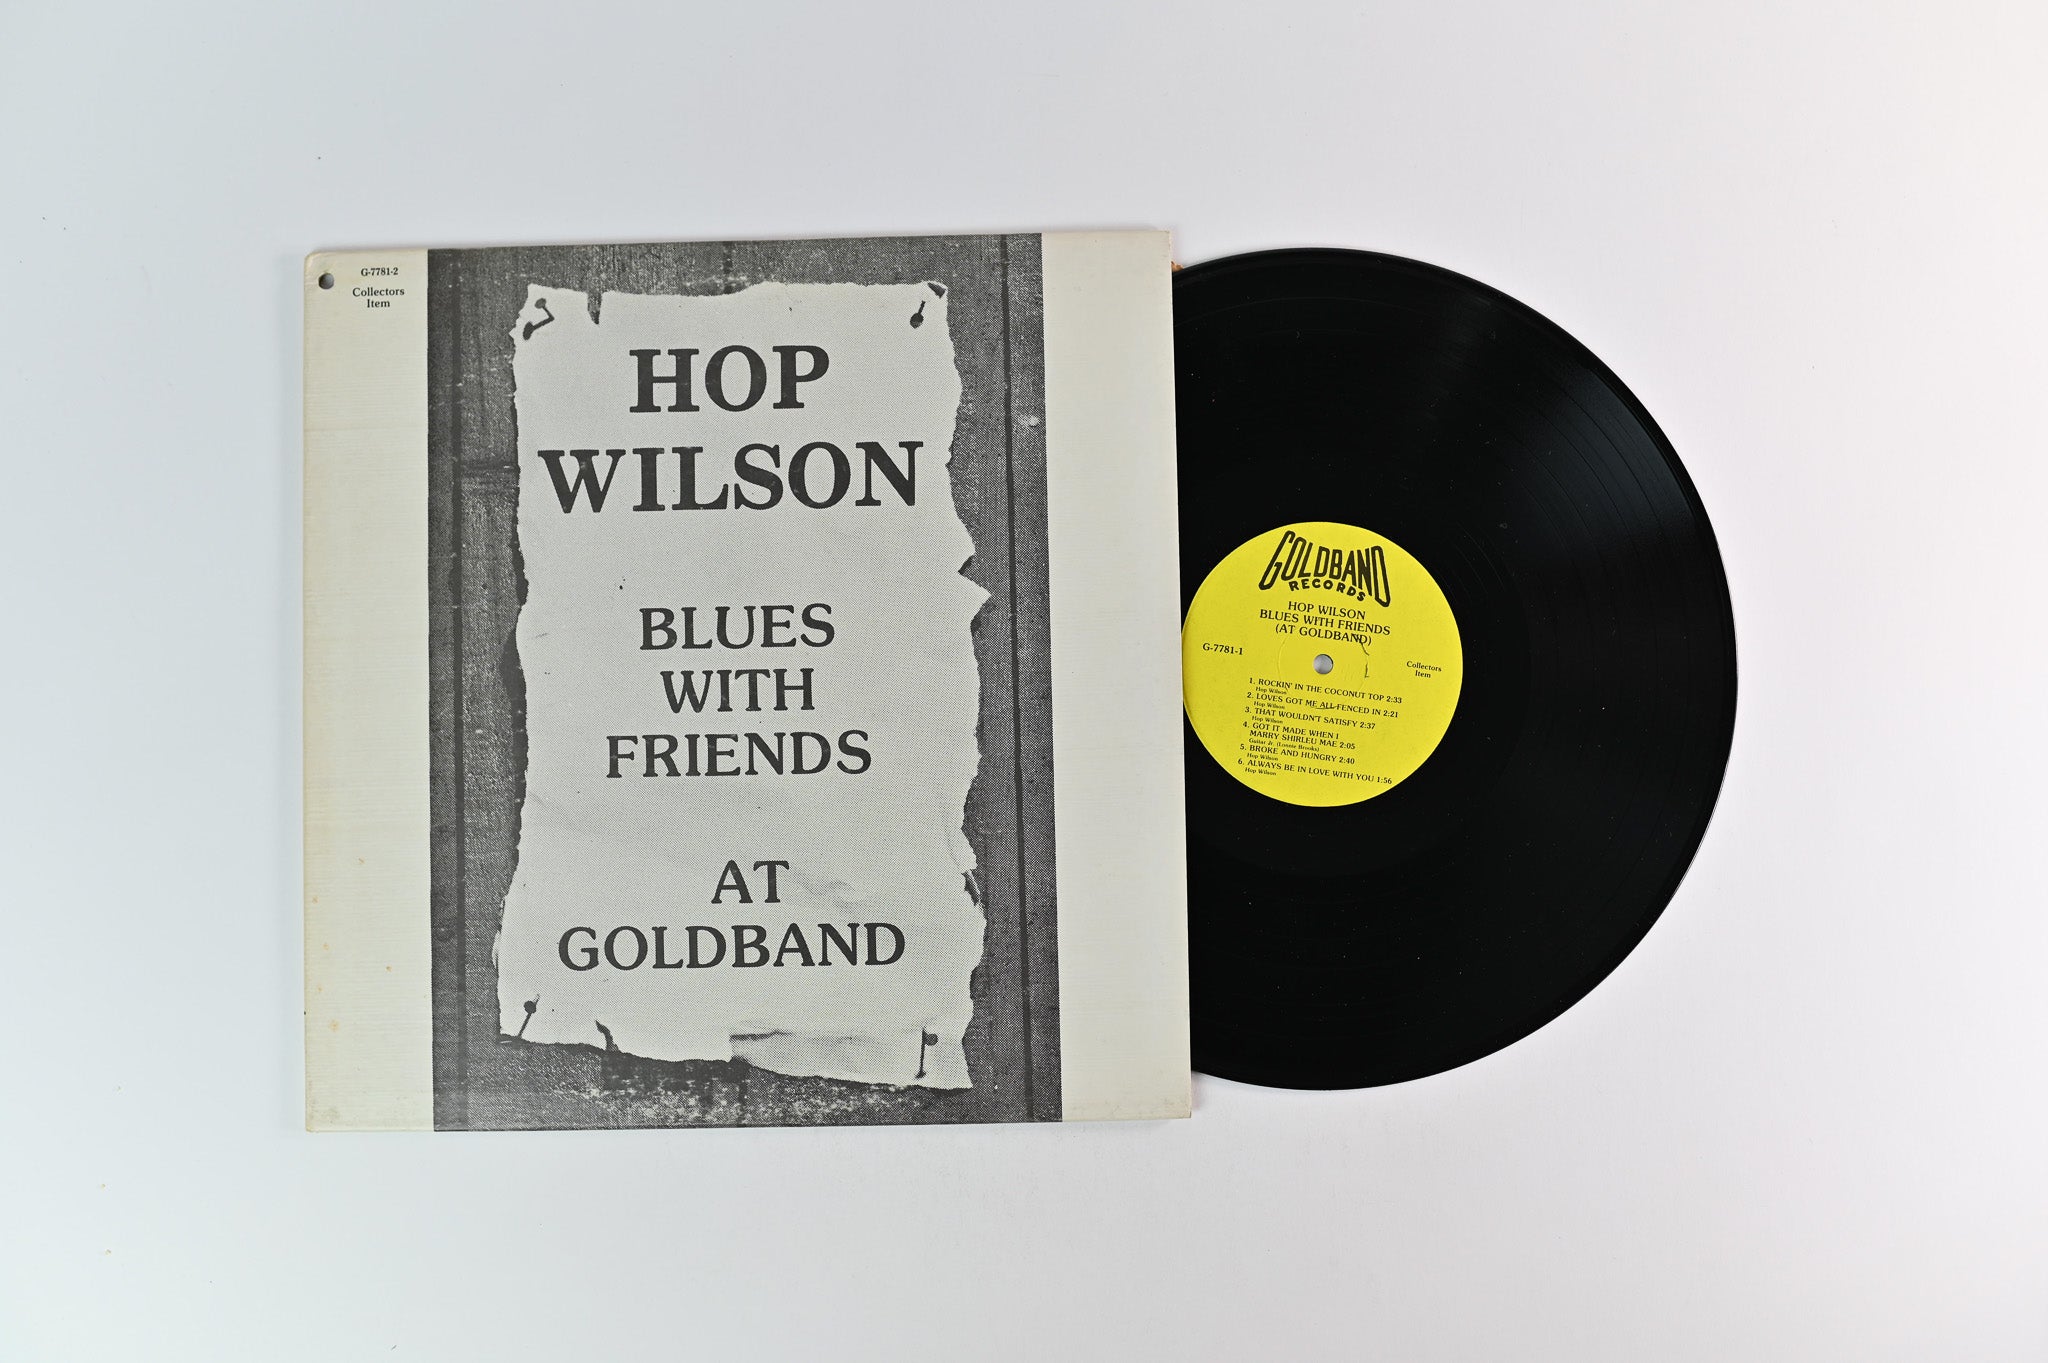 Hop Wilson - Blues With Friends At Goldband on Goldband